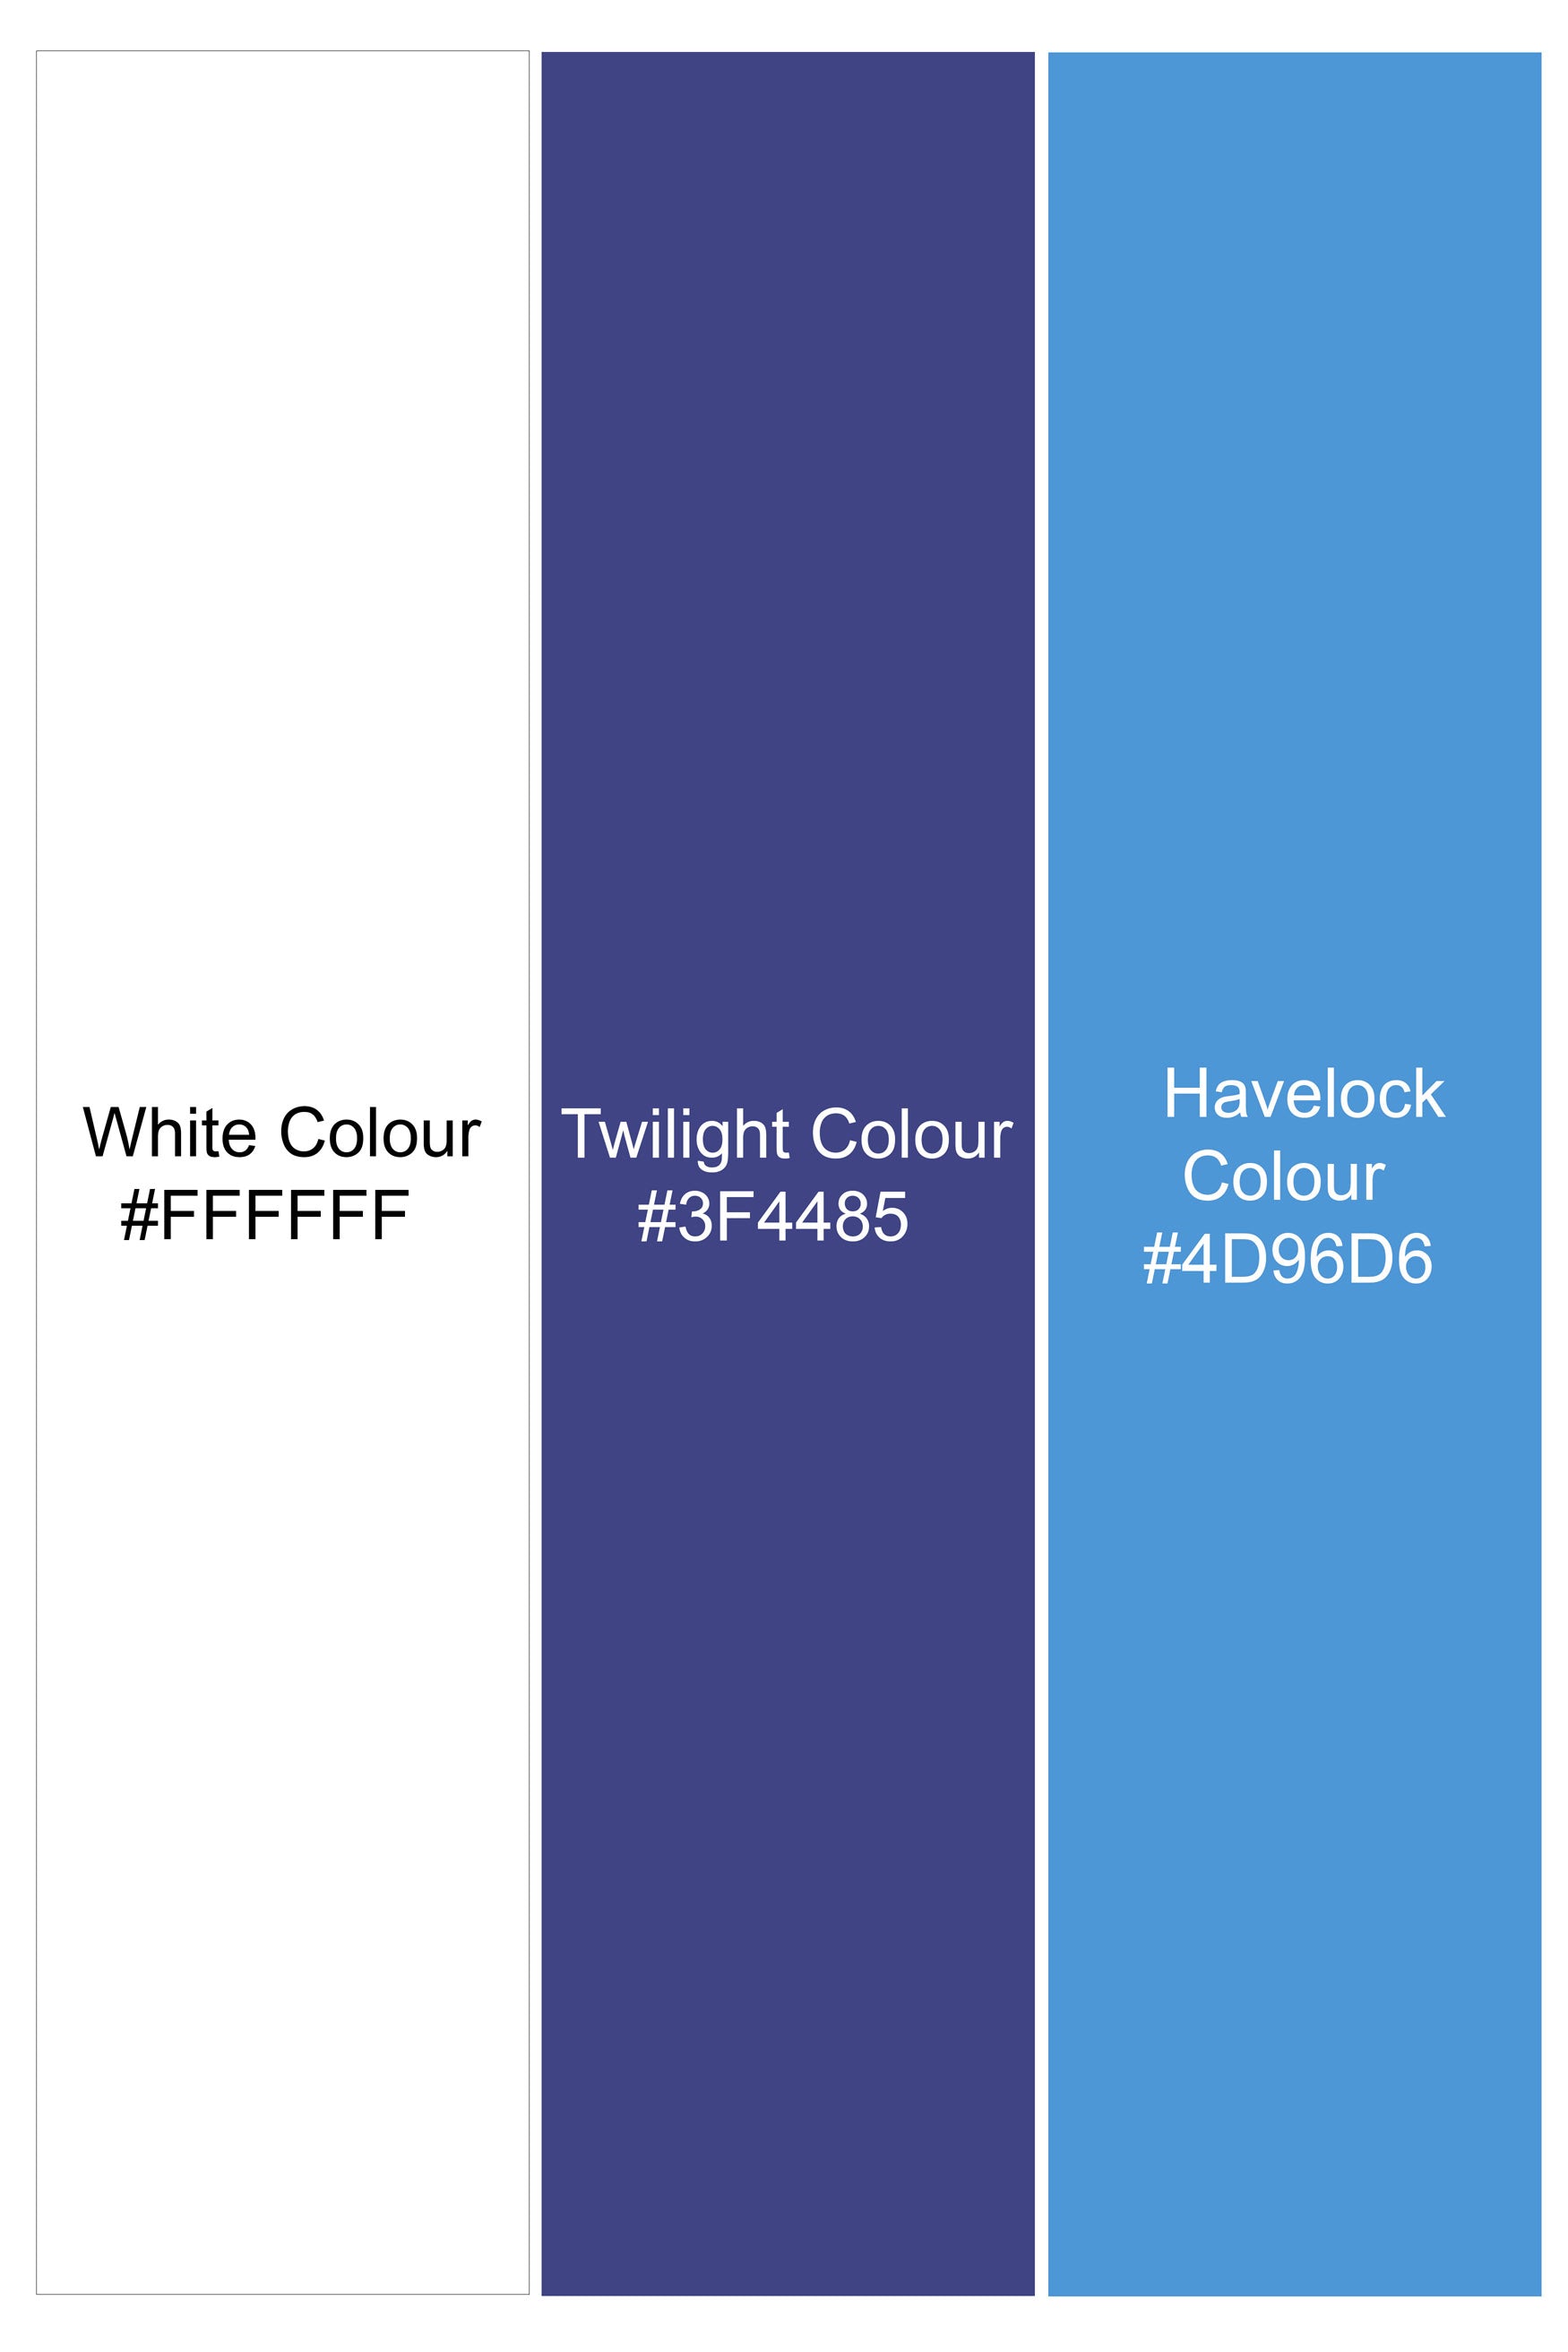 Bright White and Twilight Blue Paisley Printed Subtle Sheen Super Soft Premium Cotton Shirt 11672-M-38, 11672-M-H-38, 11672-M-39, 11672-M-H-39, 11672-M-40, 11672-M-H-40, 11672-M-42, 11672-M-H-42, 11672-M-44, 11672-M-H-44, 11672-M-46, 11672-M-H-46, 11672-M-48, 11672-M-H-48, 11672-M-50, 11672-M-H-50, 11672-M-52, 11672-M-H-52